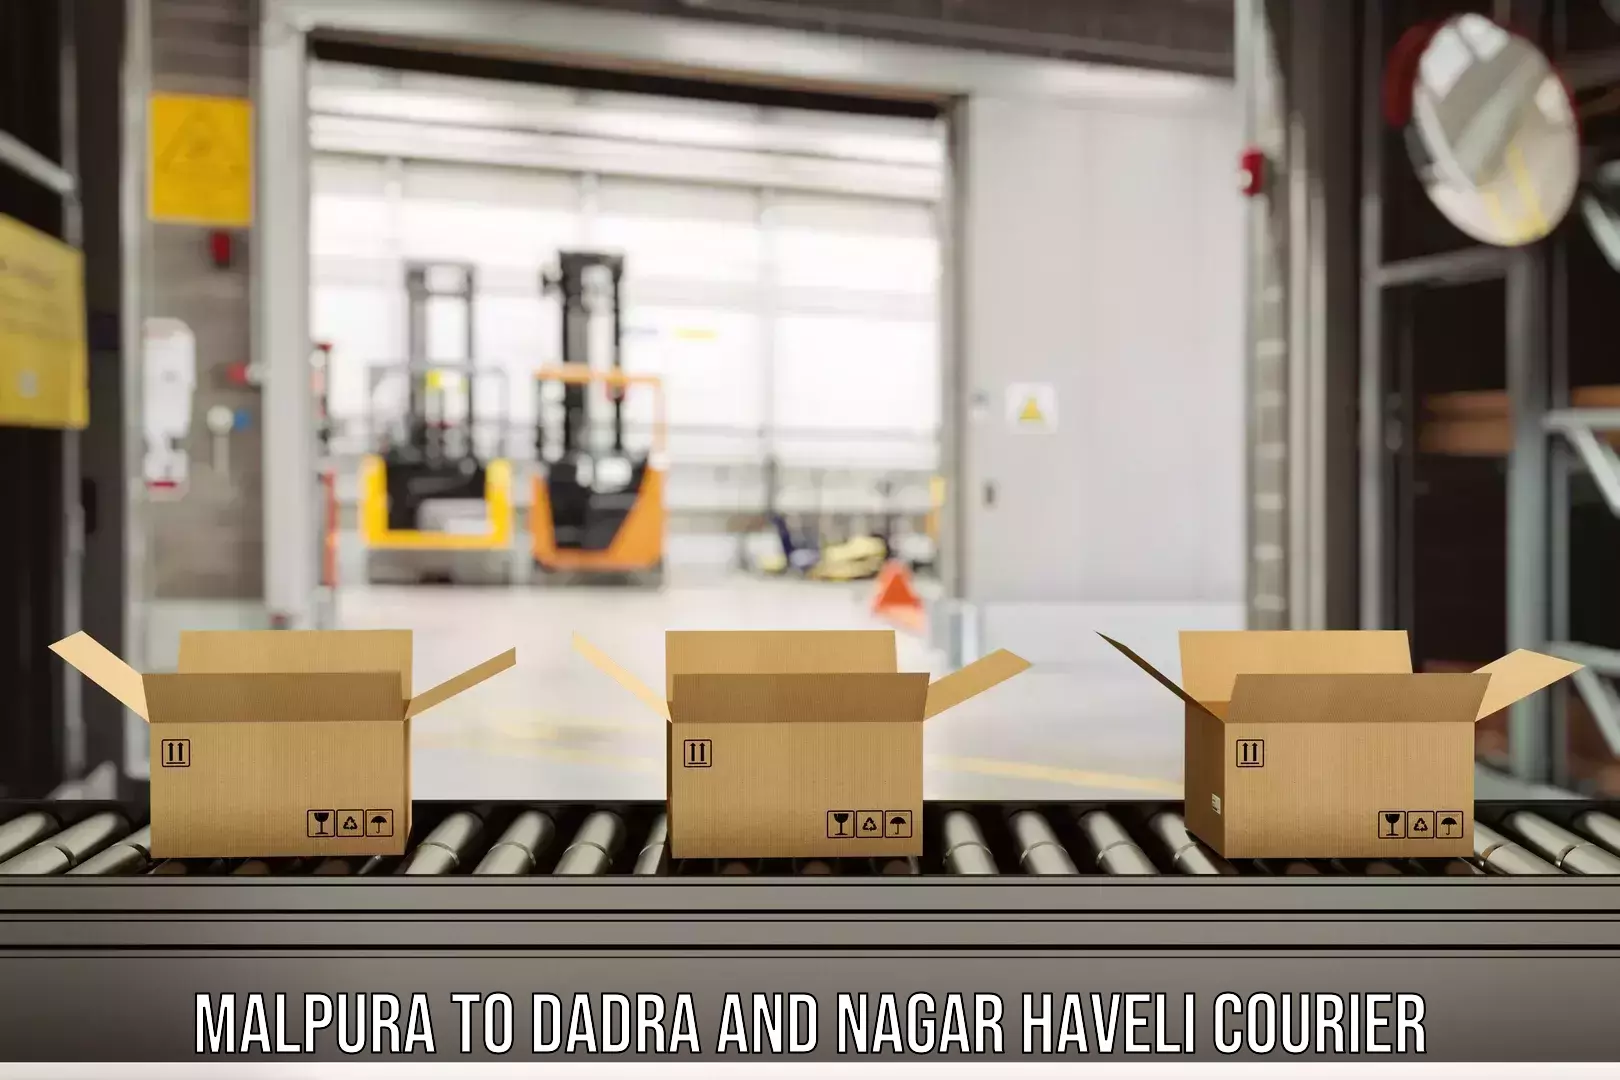 Digital courier platforms Malpura to Dadra and Nagar Haveli